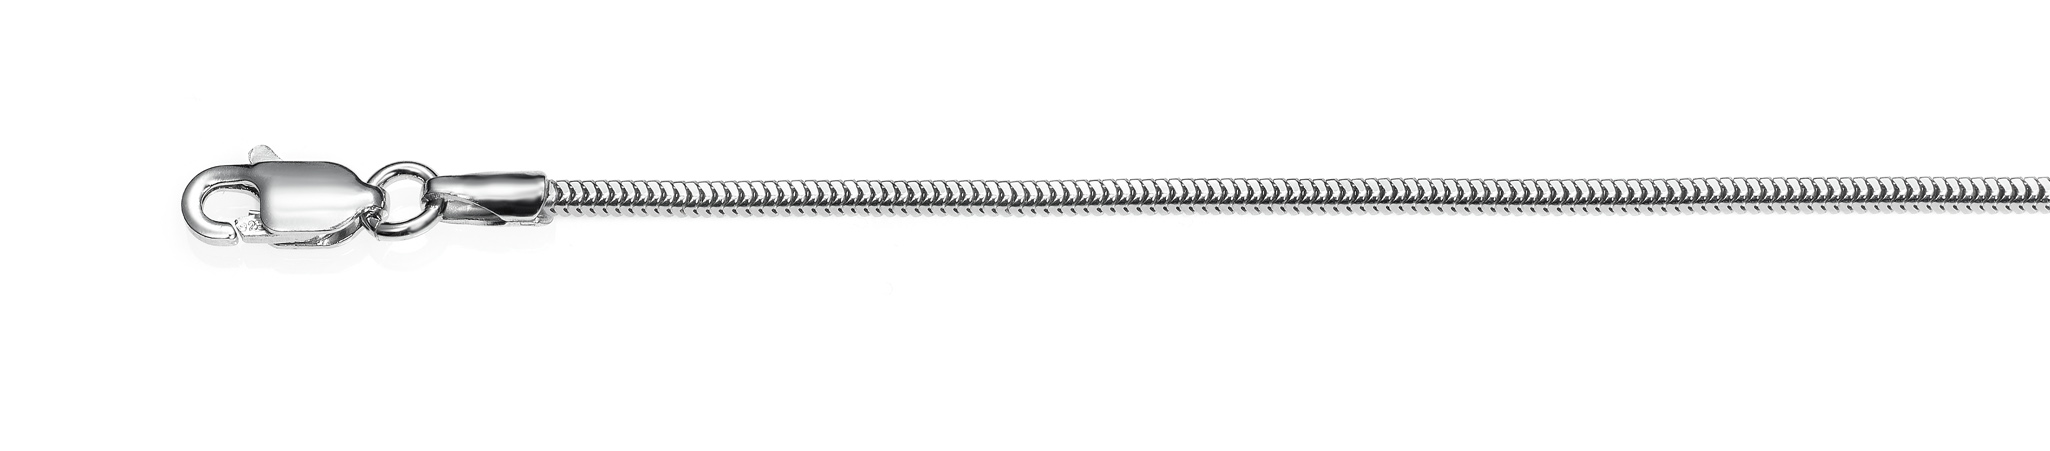 Ref.: 90914 - Diamond cut snake rhodium plated - Wide 1.4